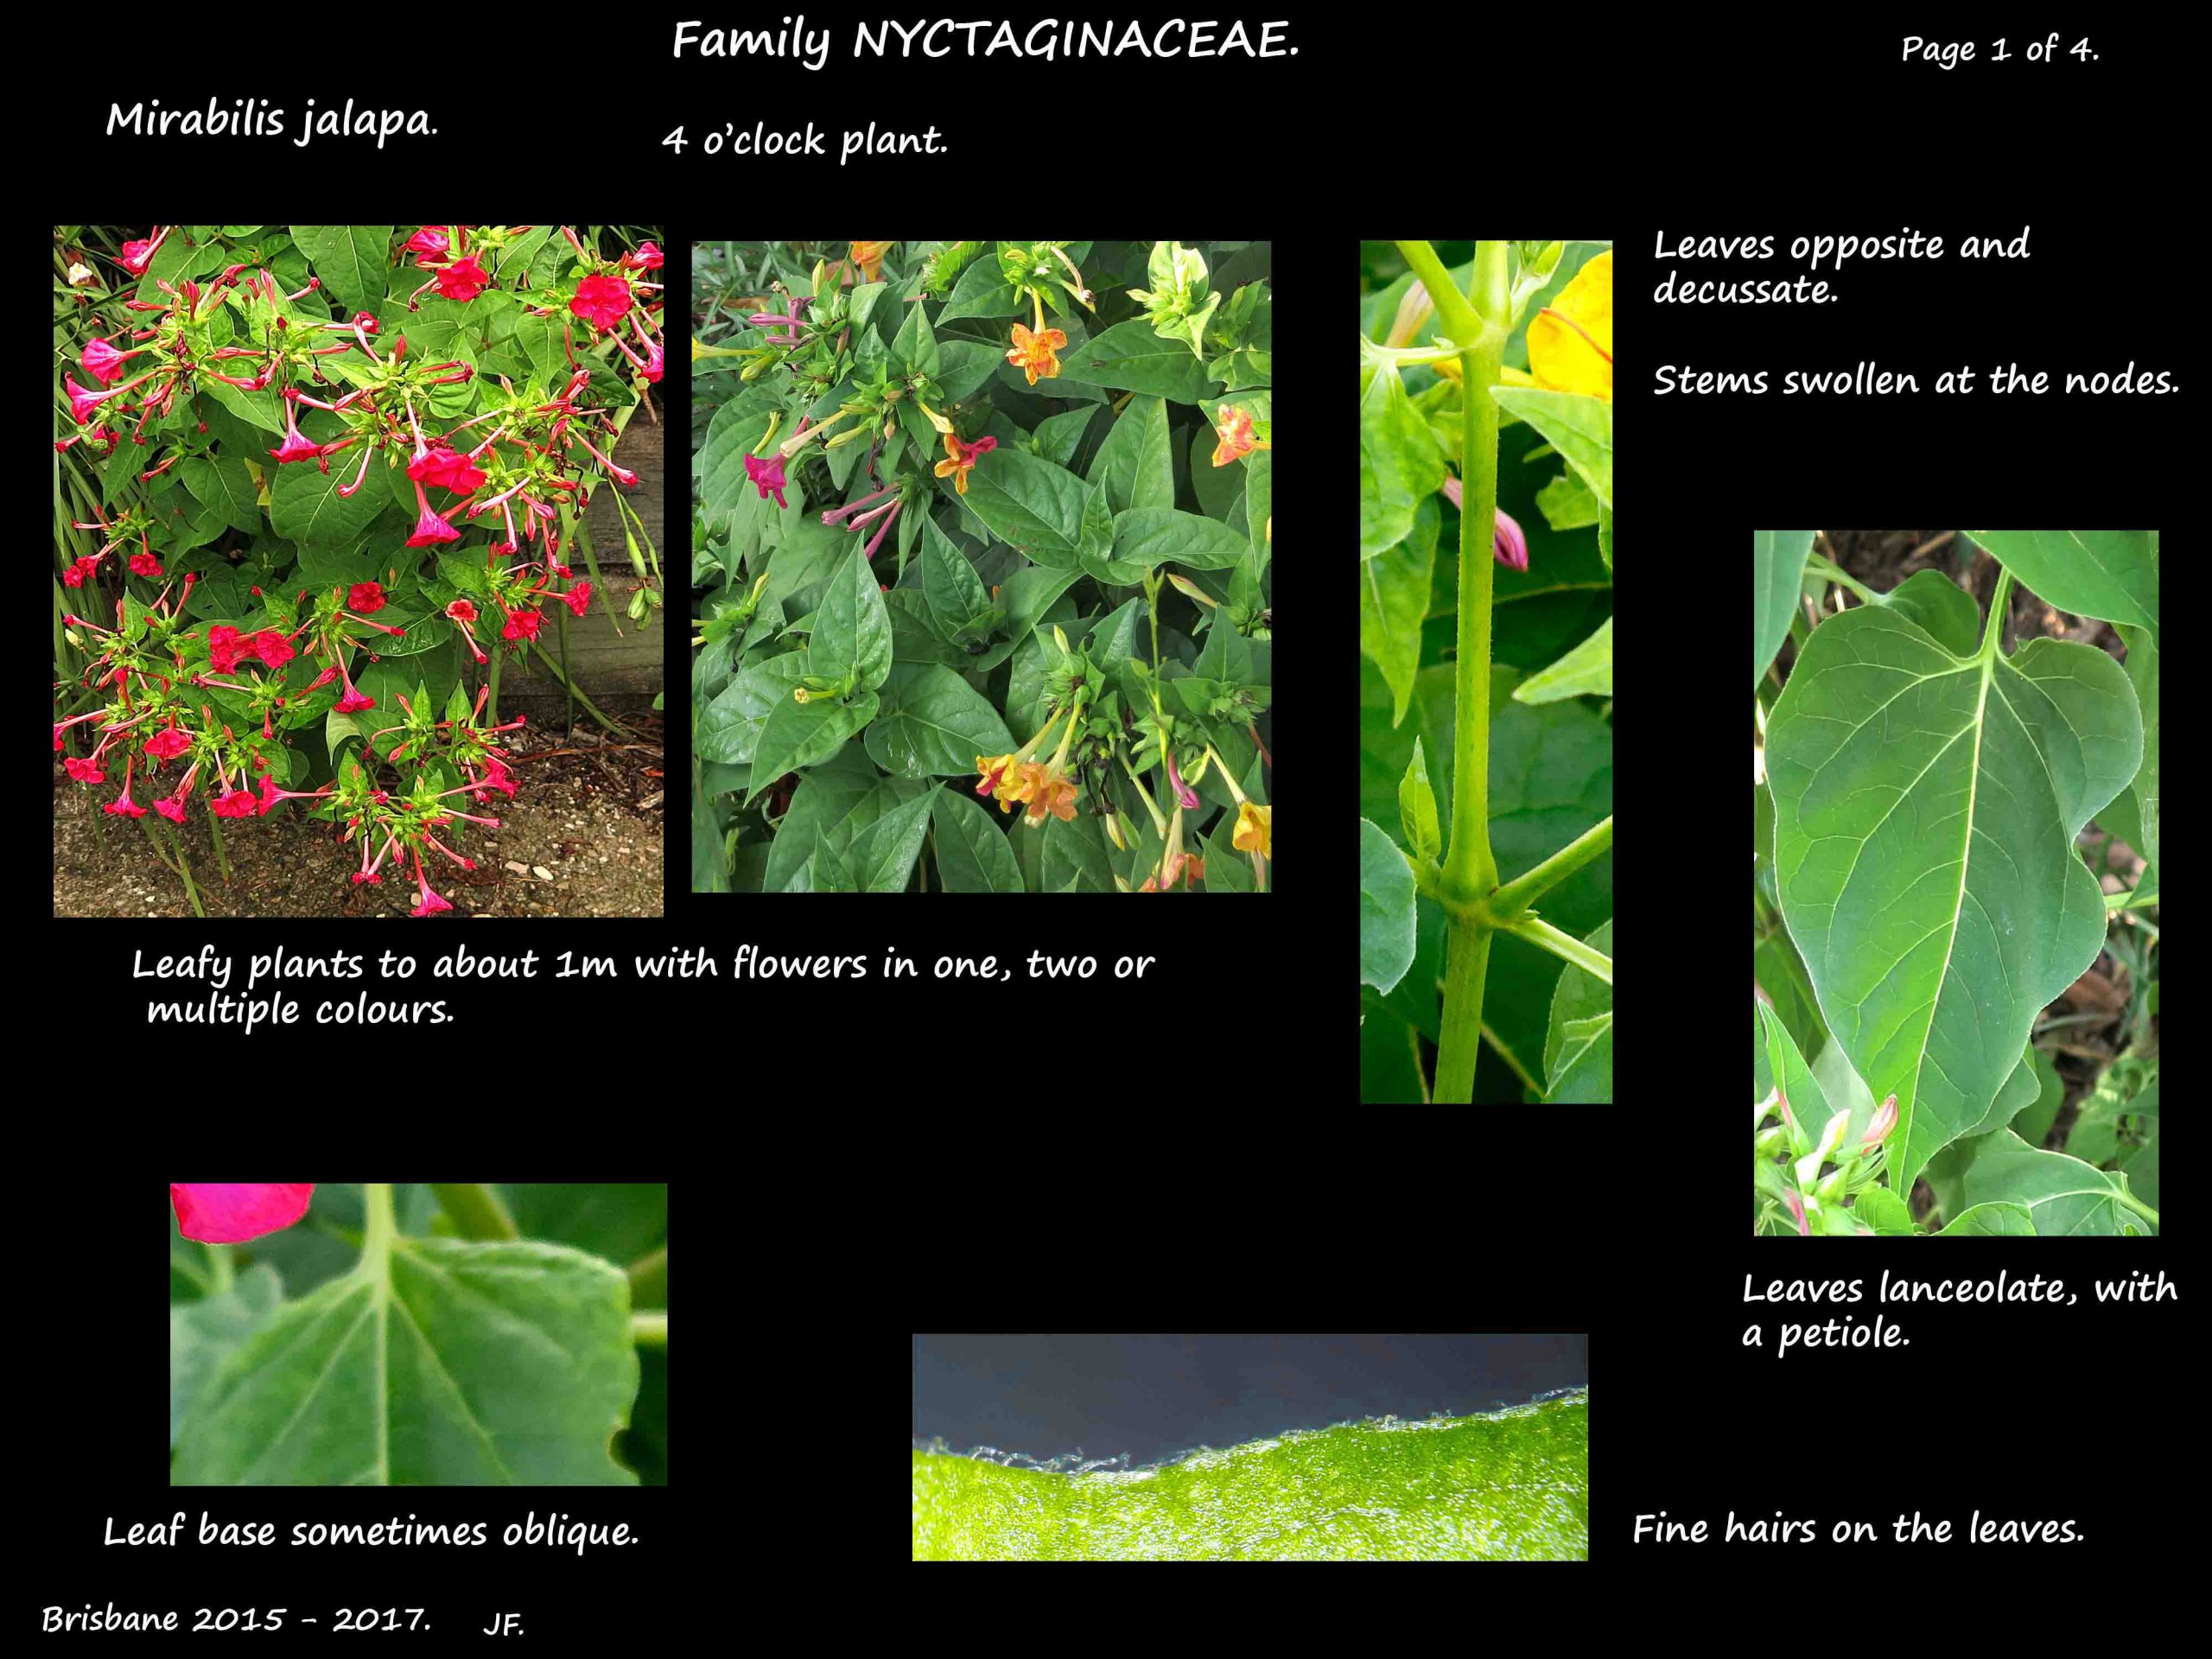 1 Mirabilis jalapa plants & leaves